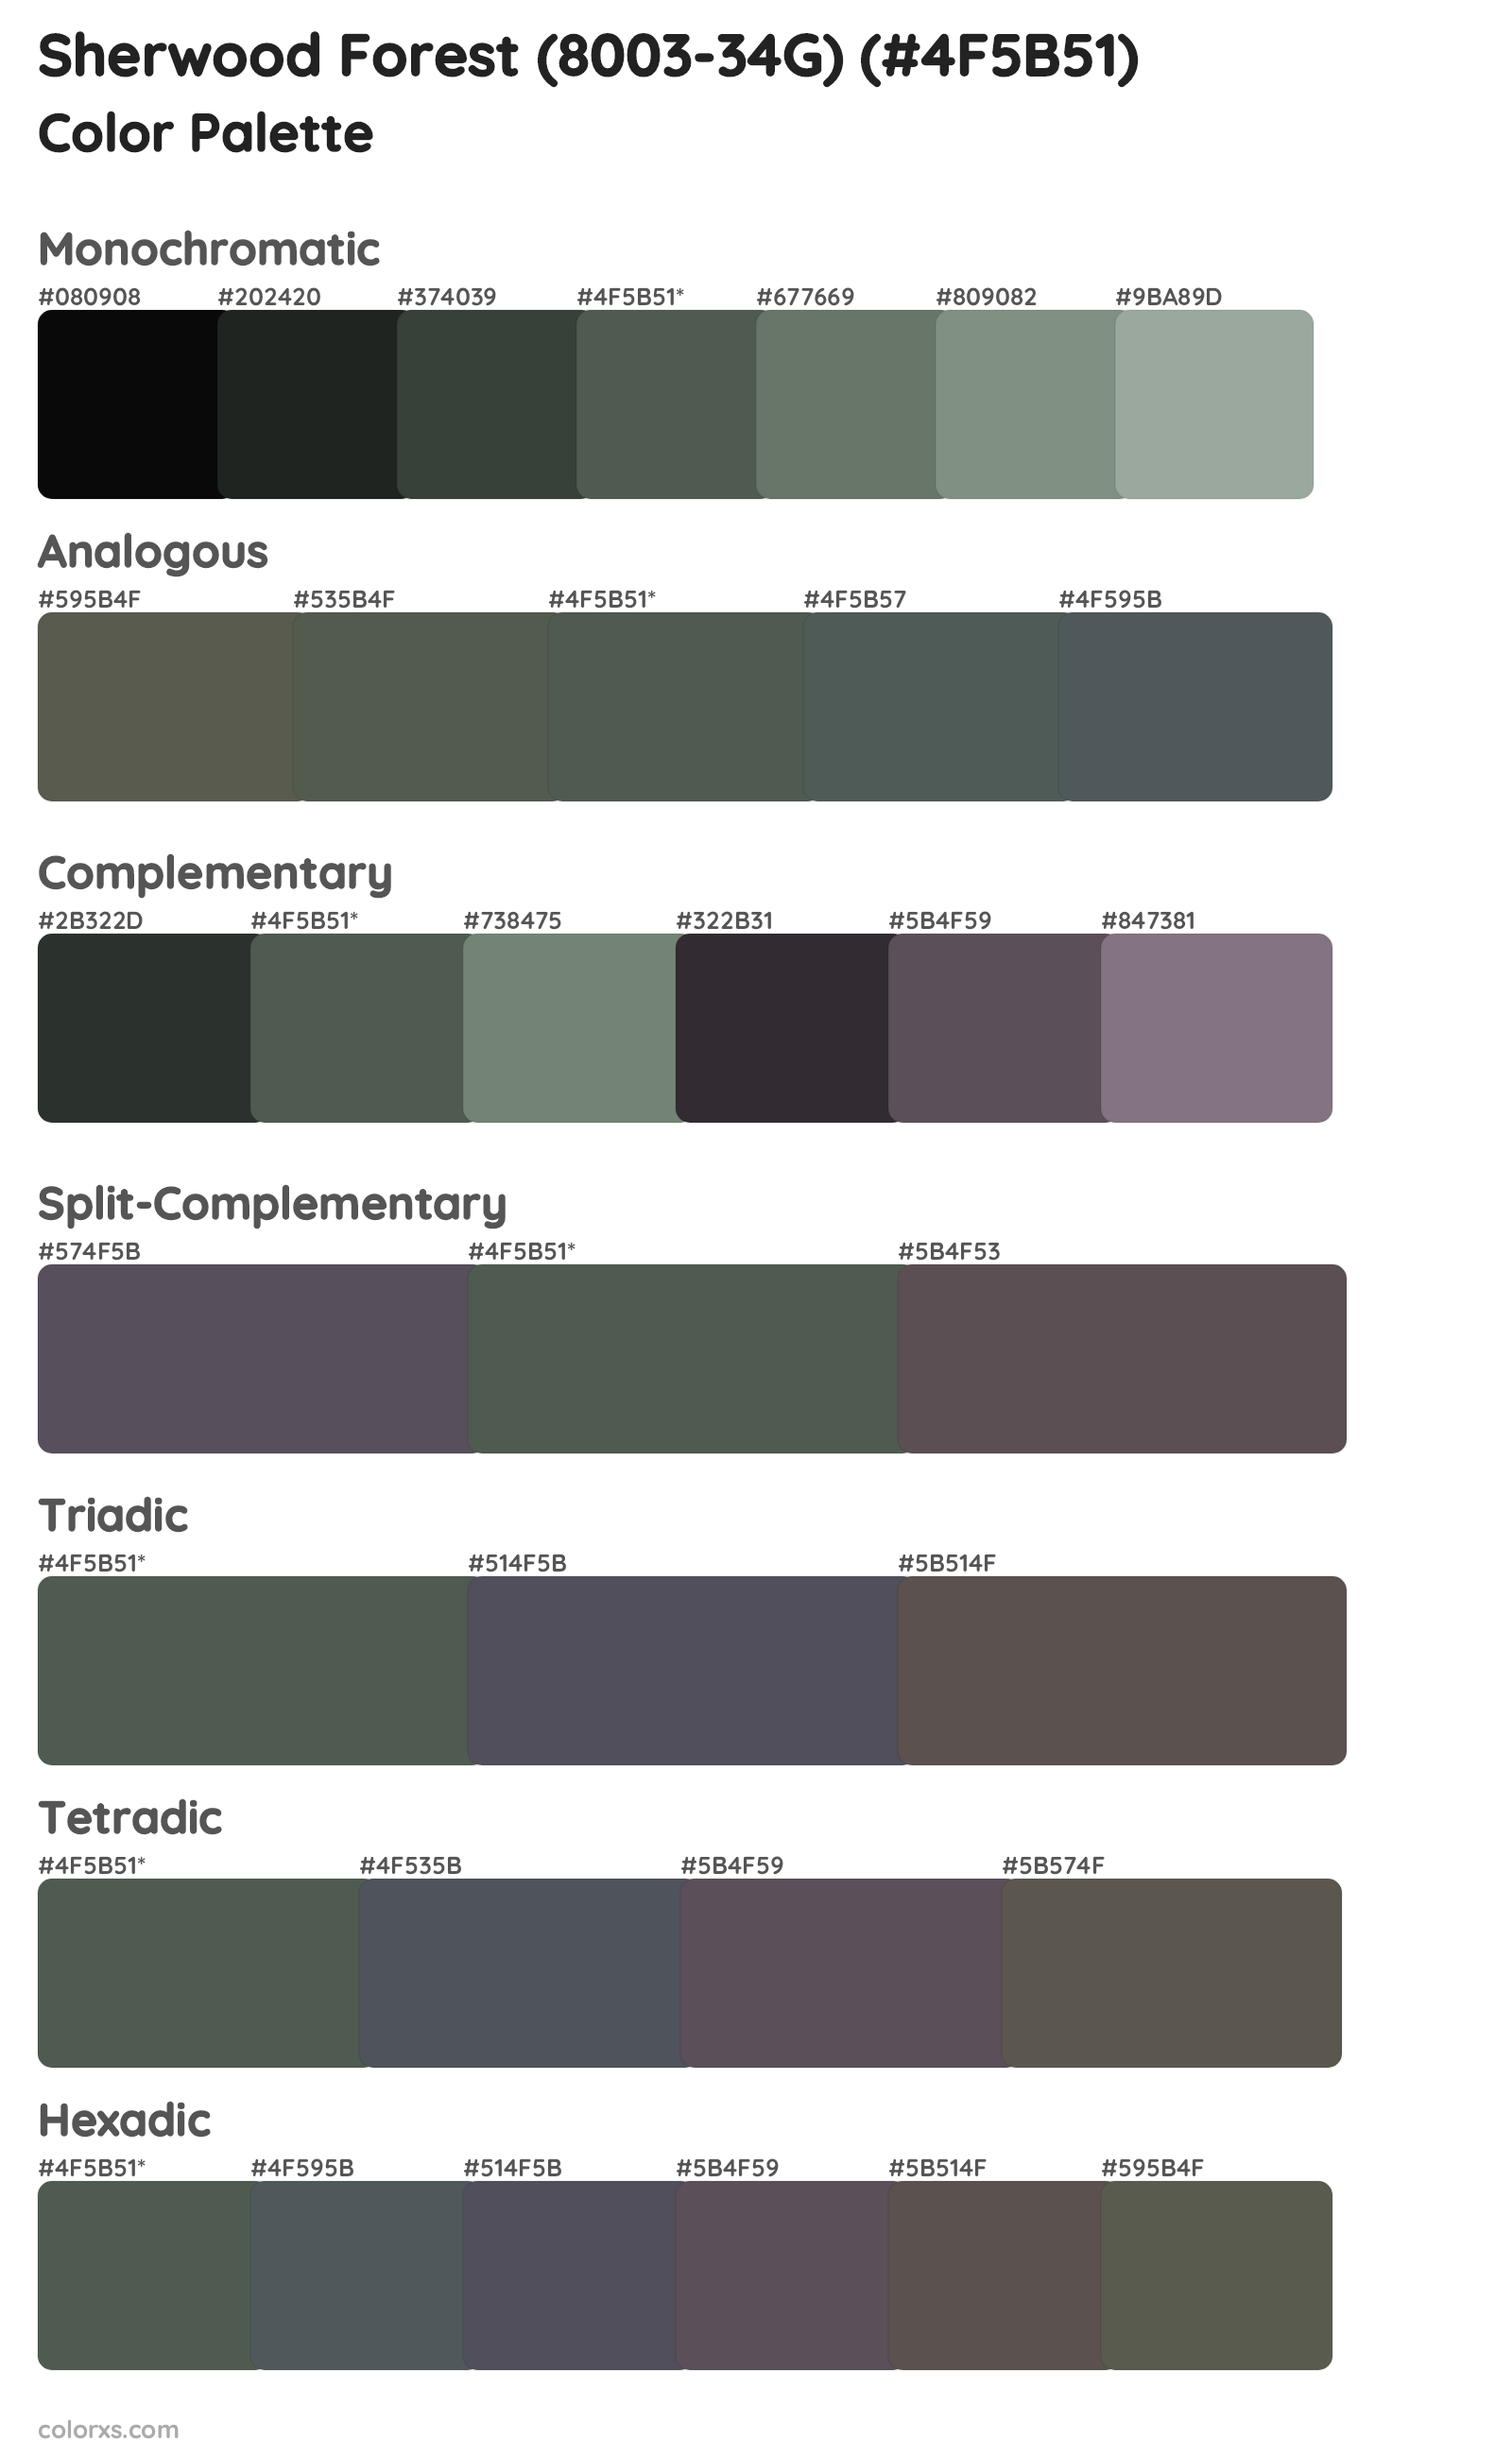 Sherwood Forest (8003-34G) Color Scheme Palettes